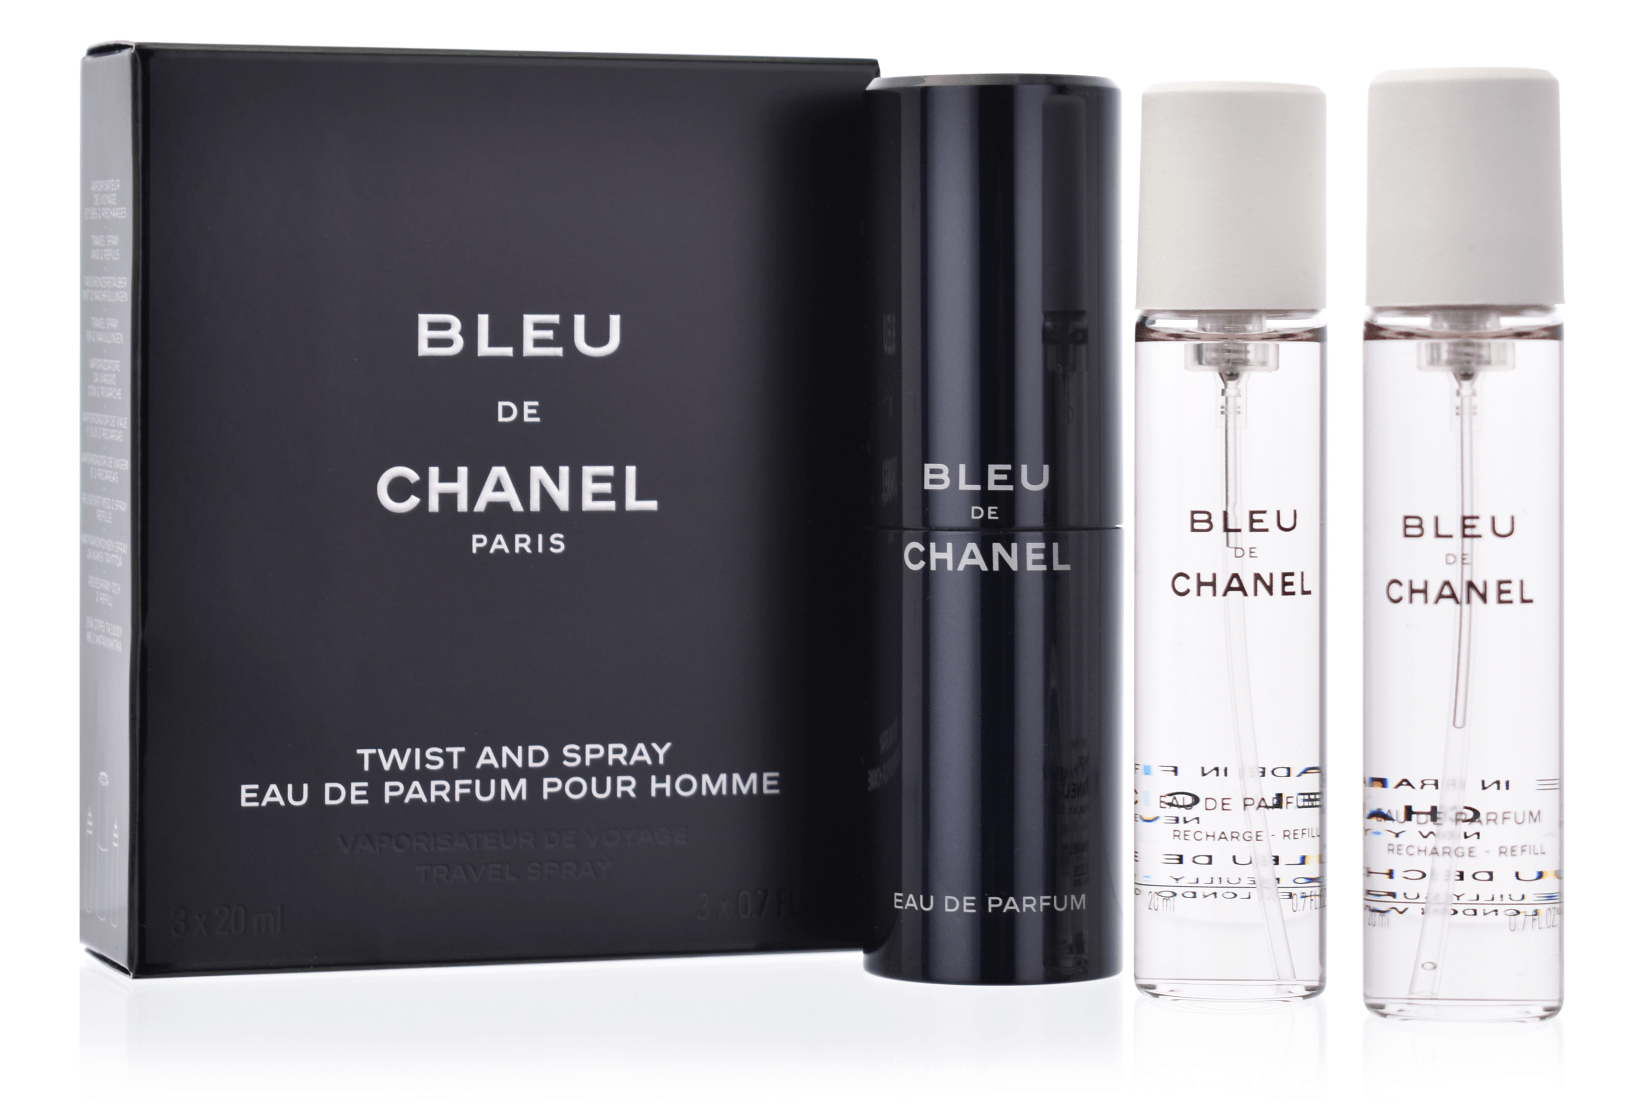 Chanel Bleu de Chanel 3 x 20 ml Eau de Parfum Twist and Spray